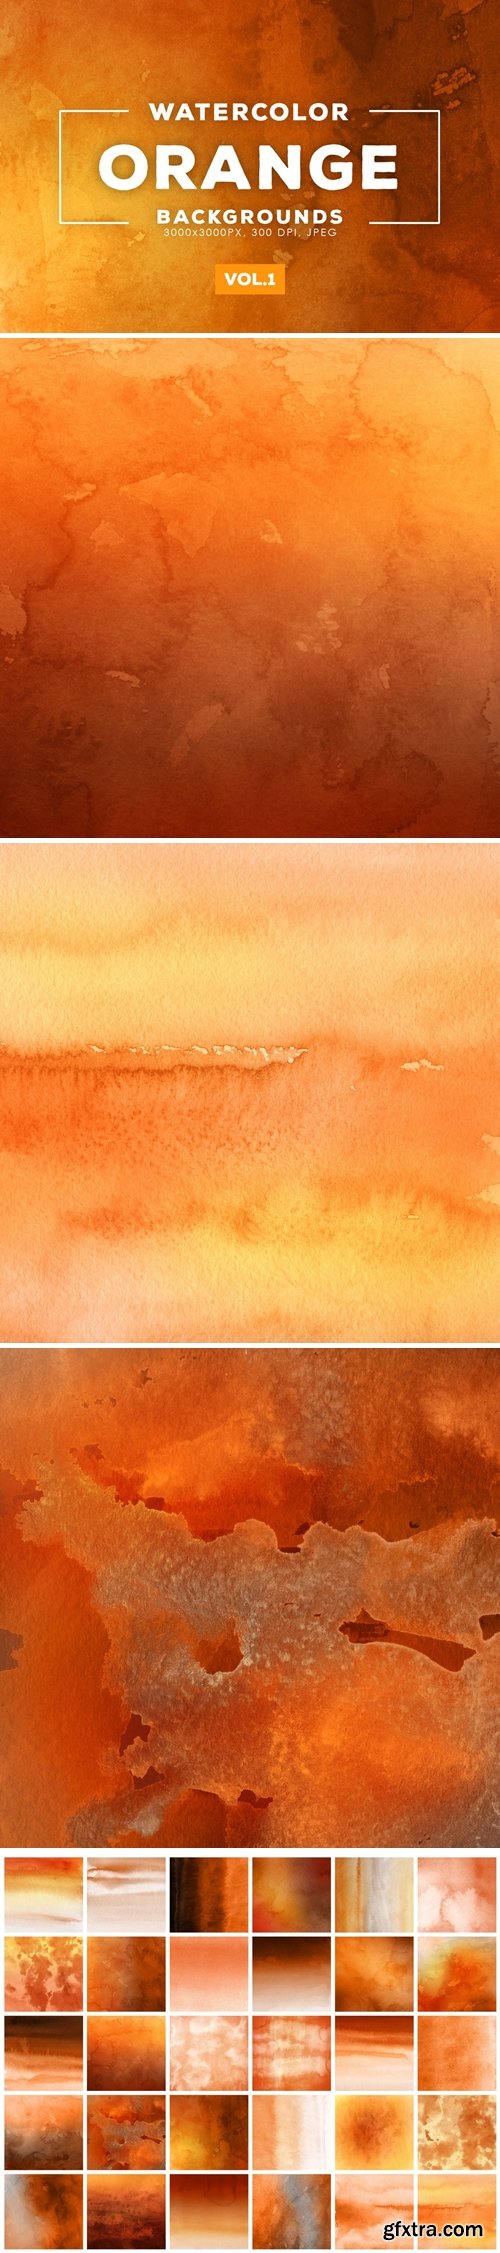 Orange Watercolor Backgrounds Vol.1